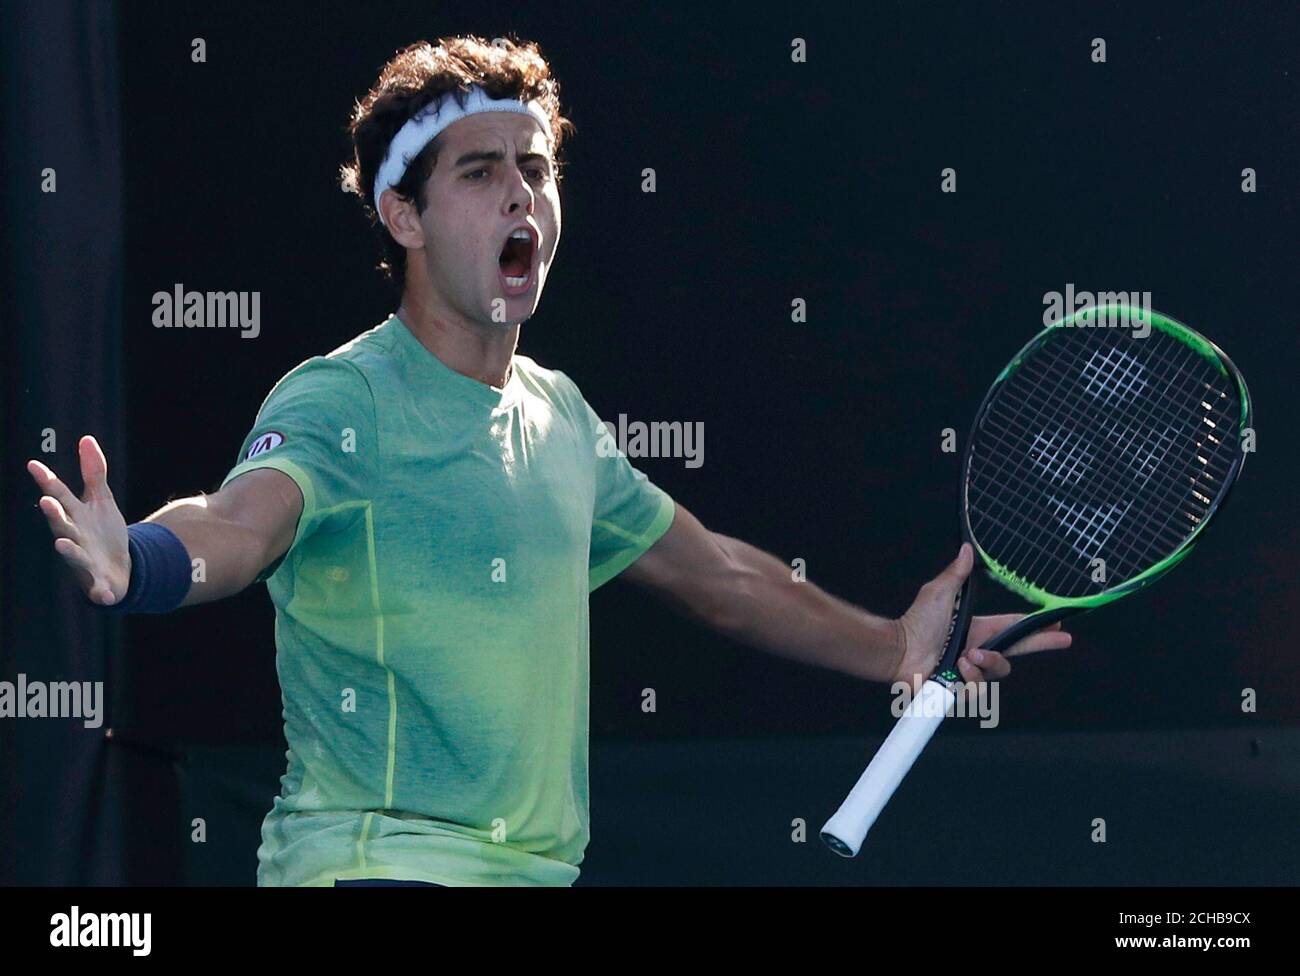 Tennis - Australian Open - Melbourne, Australia, January 16, 2018. Jaume Munar of Spain celebrates a point against Gael Monfils of France. REUTERS/Edgar Su Stock - Alamy